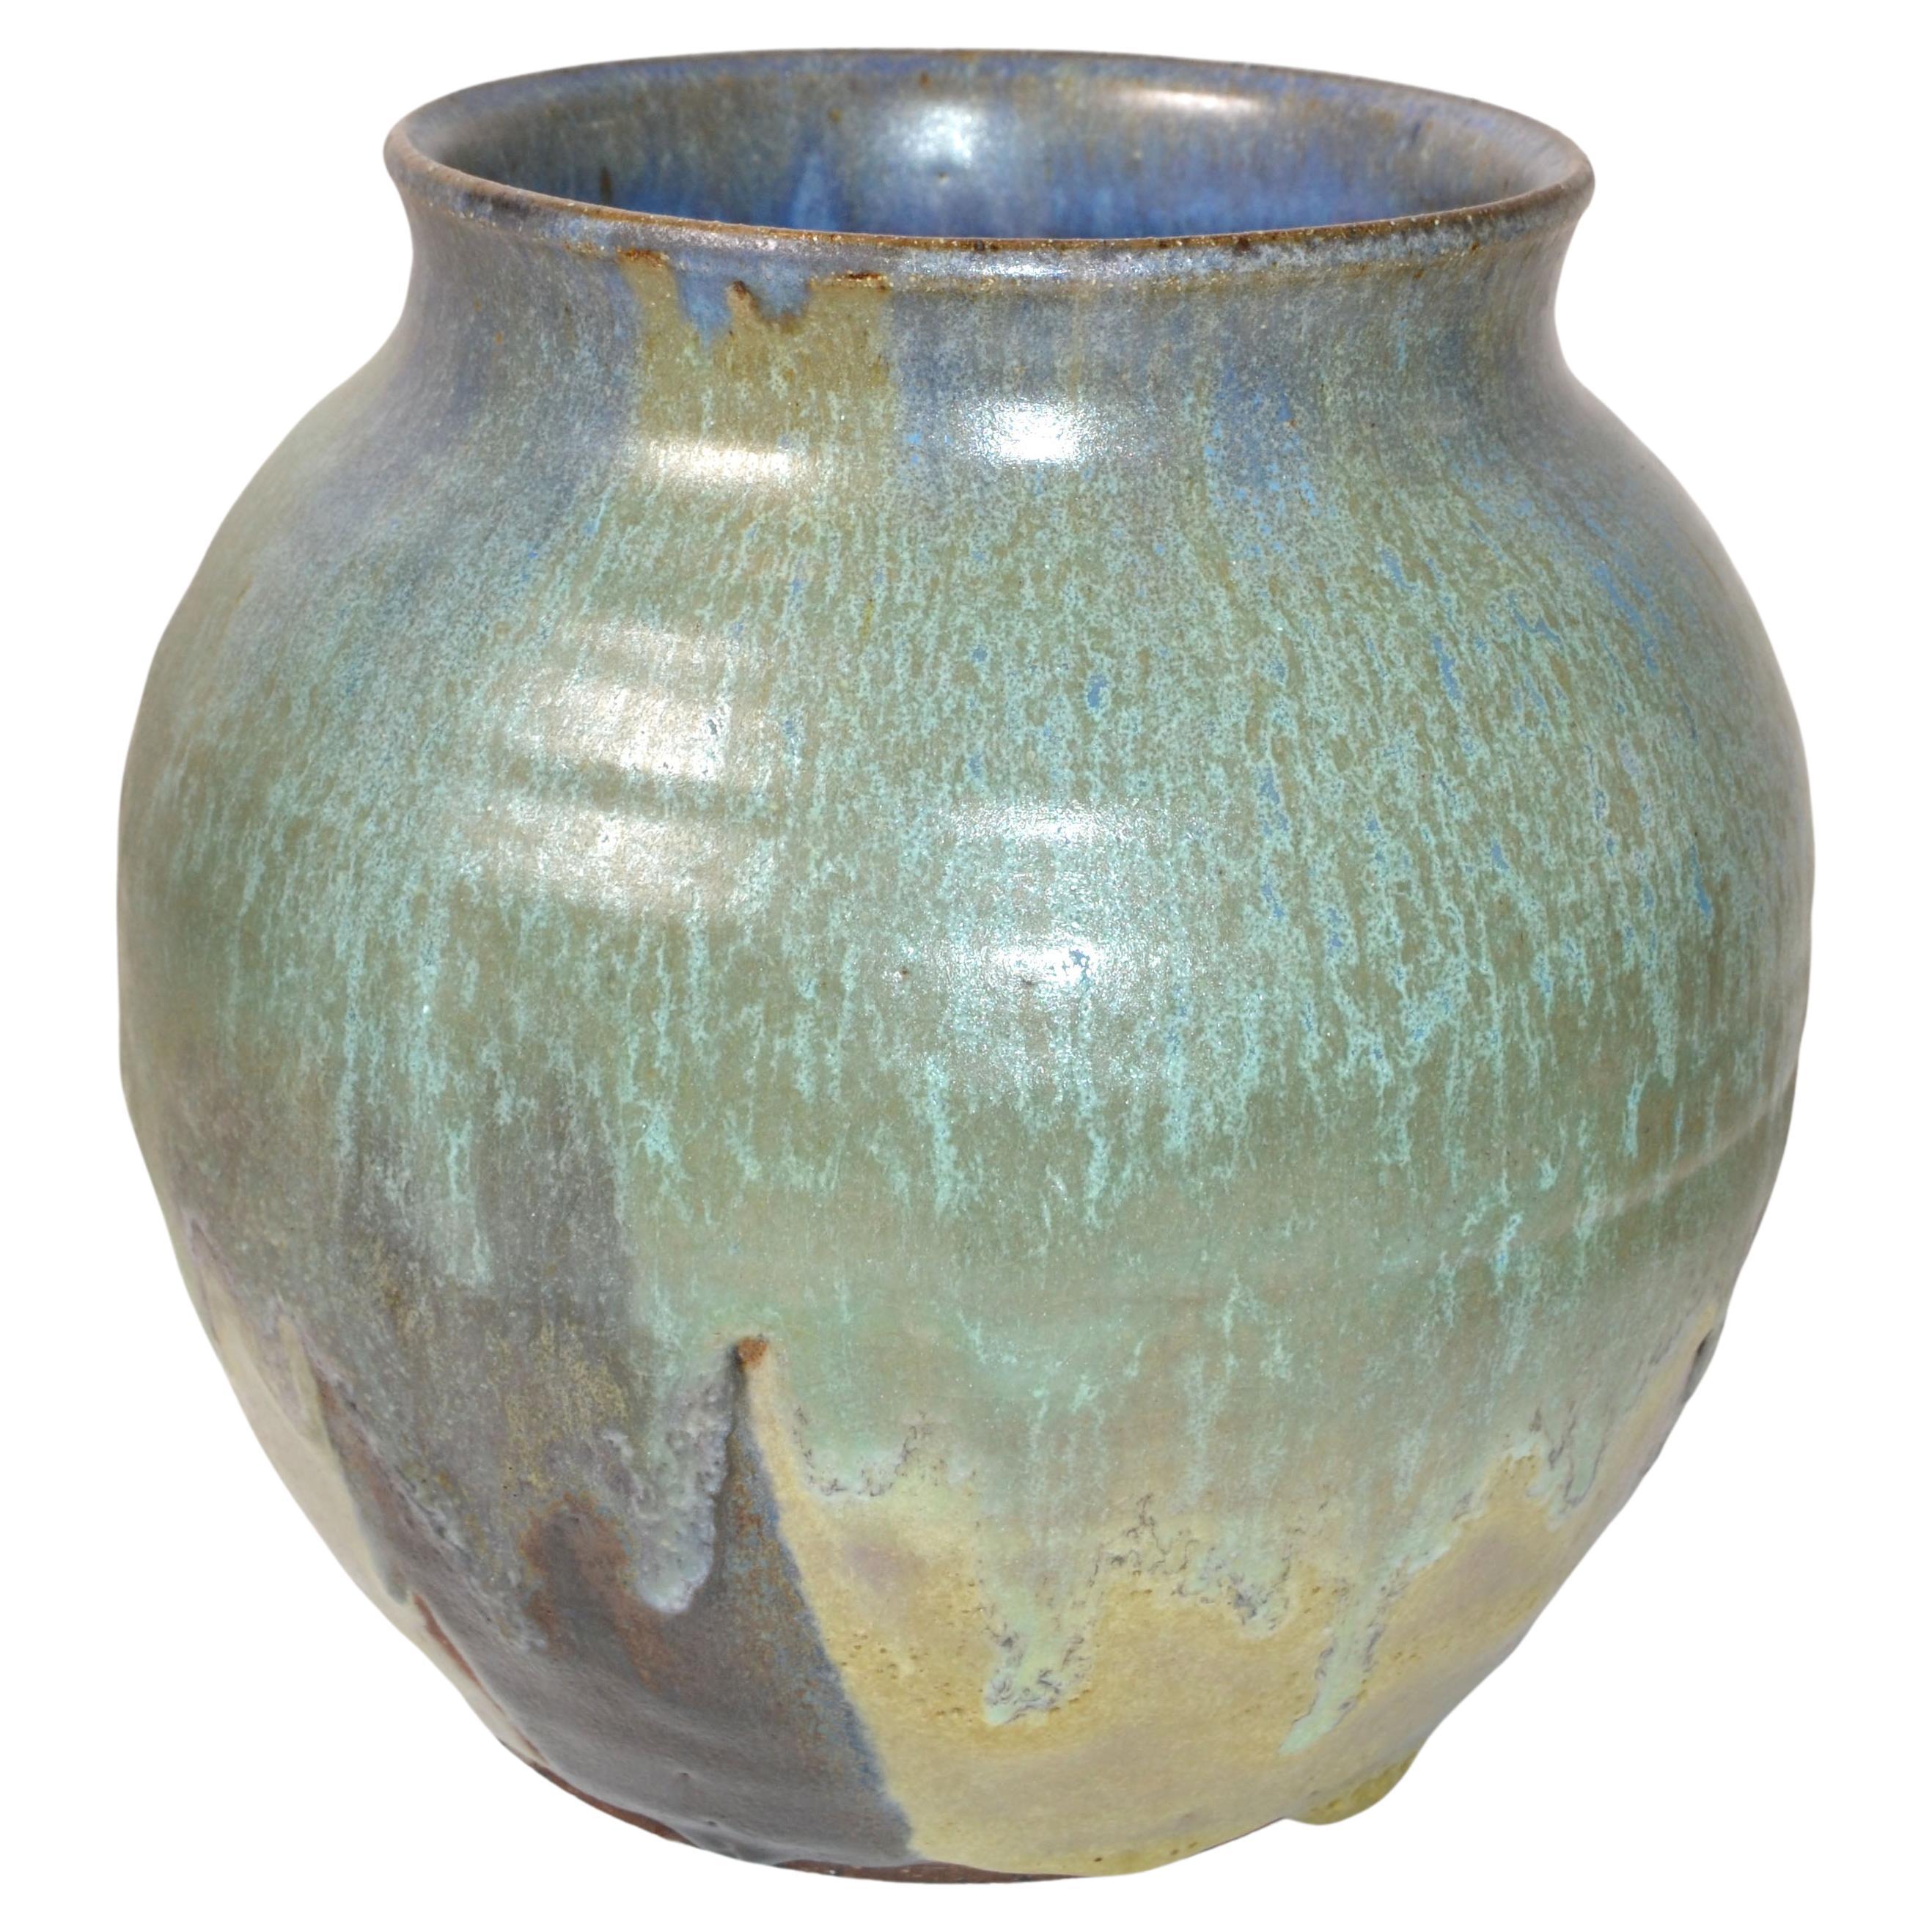 Signed Joseph Pottery Mint Green Blue & Brown Ceramic Bowl Vase Vessel American